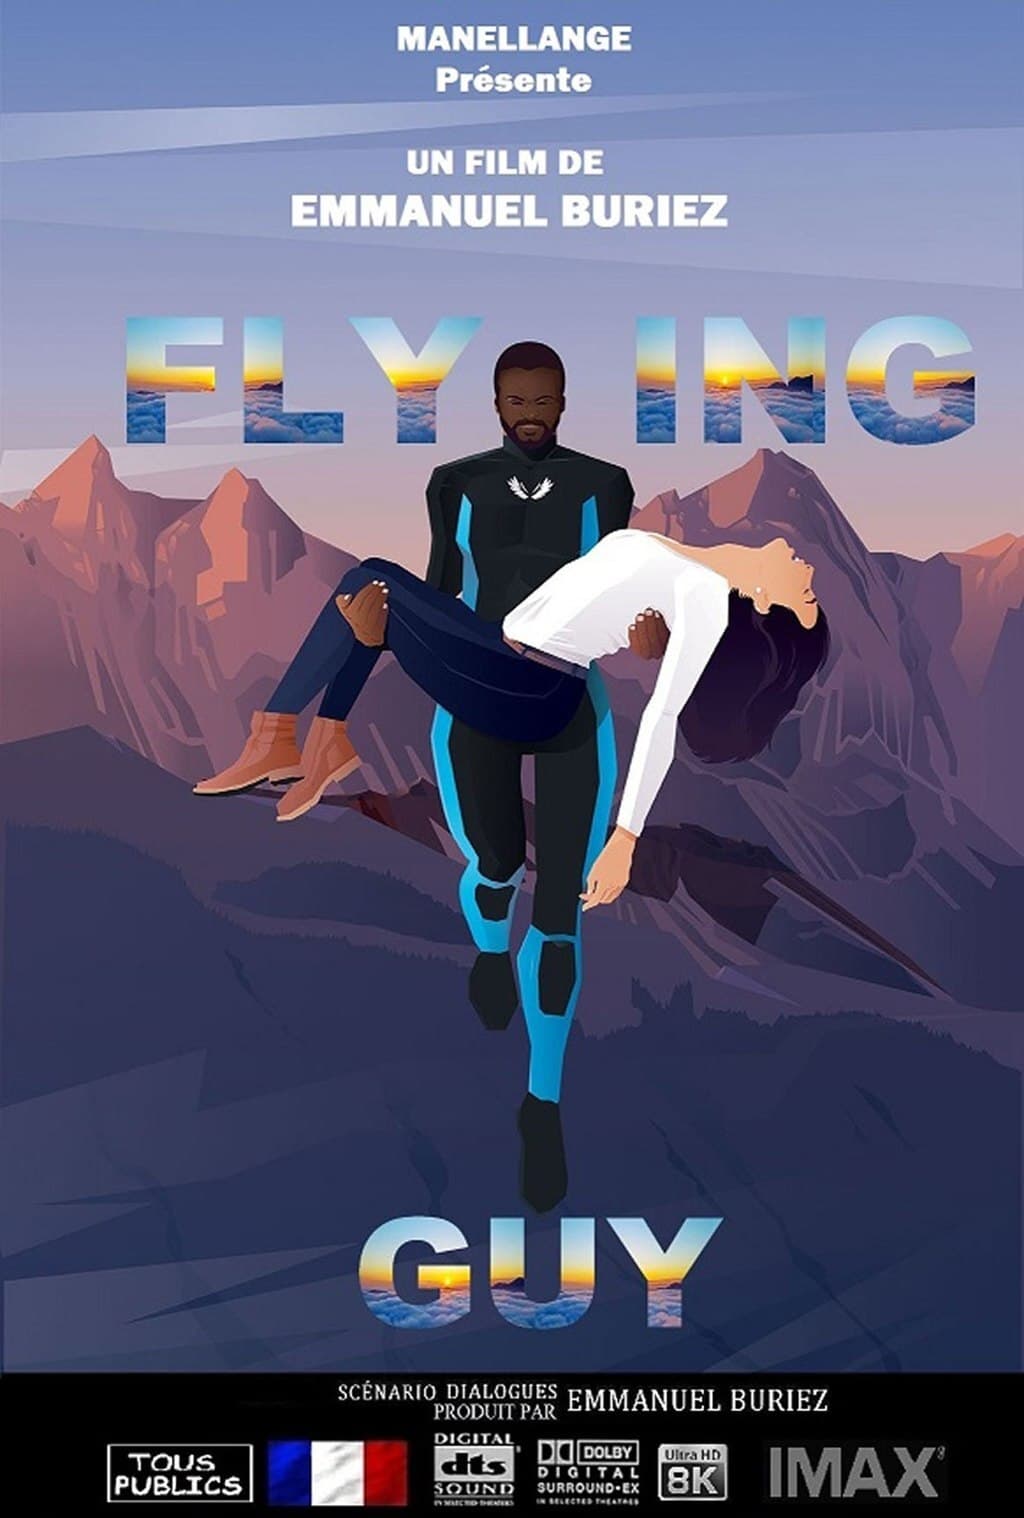 The Flying guy